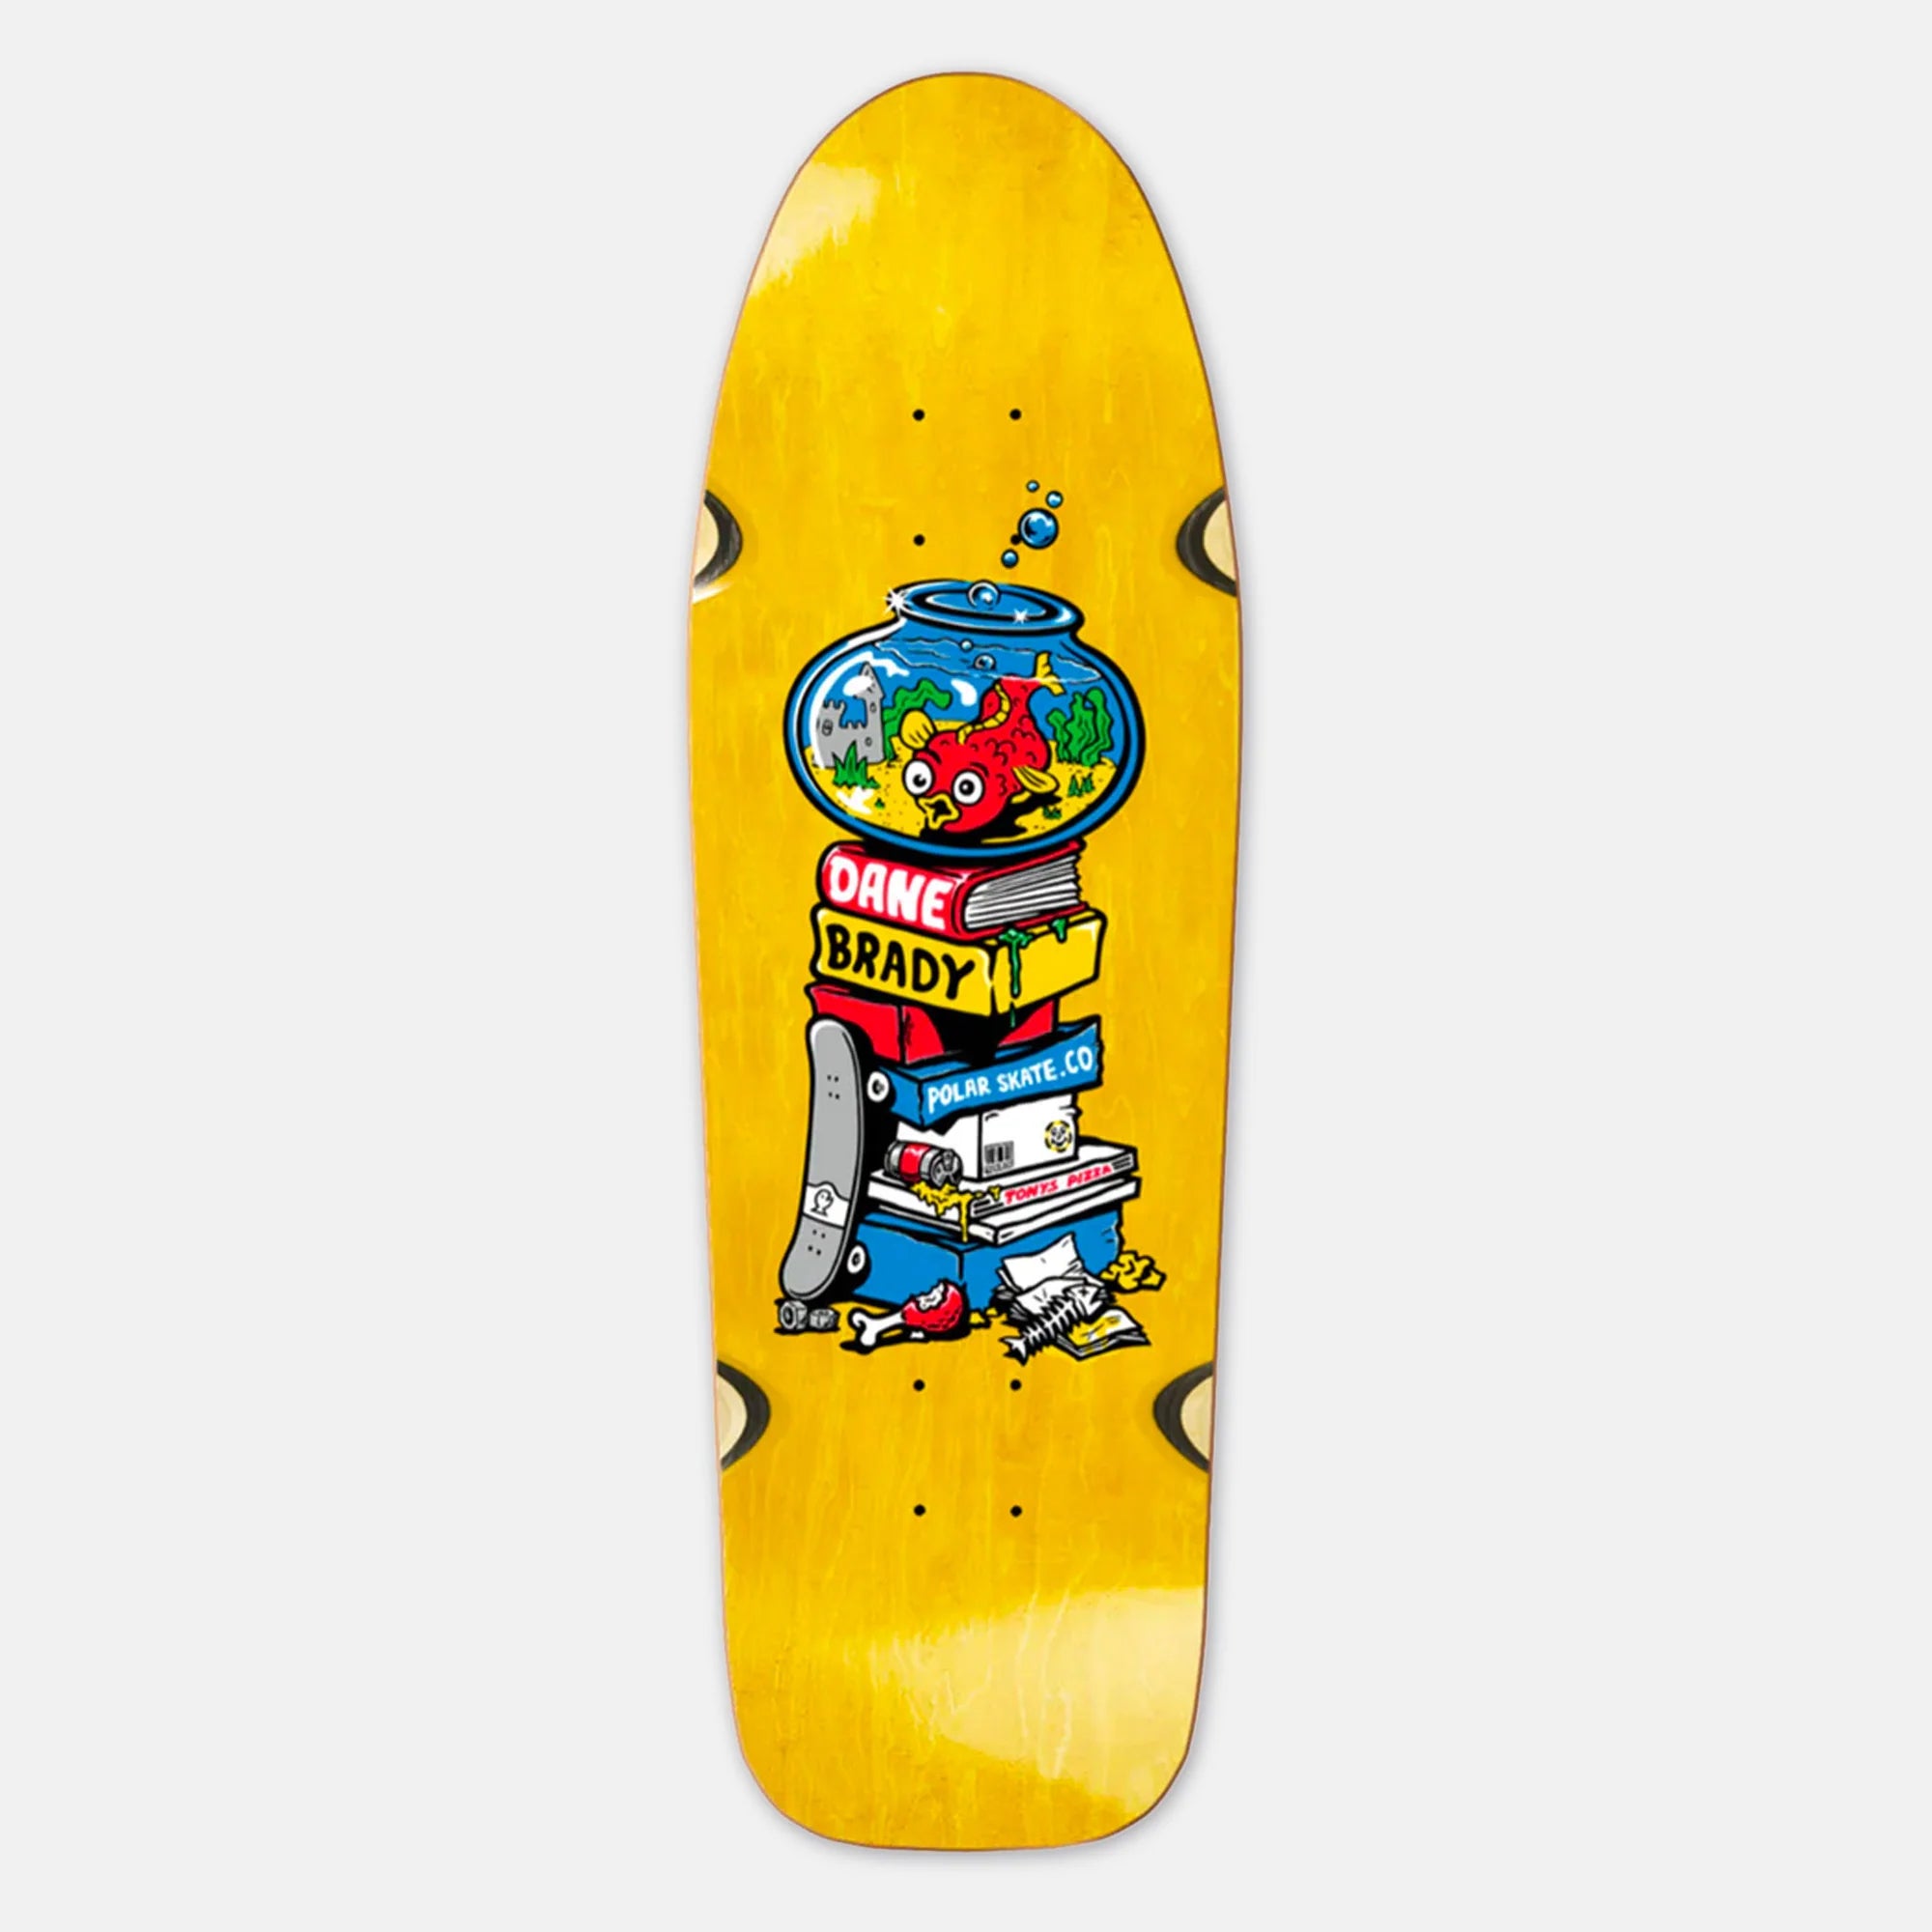 Polar Skate Co. - Surf Jr 8.75" Dane Brady Fish Bowl Skateboard Deck